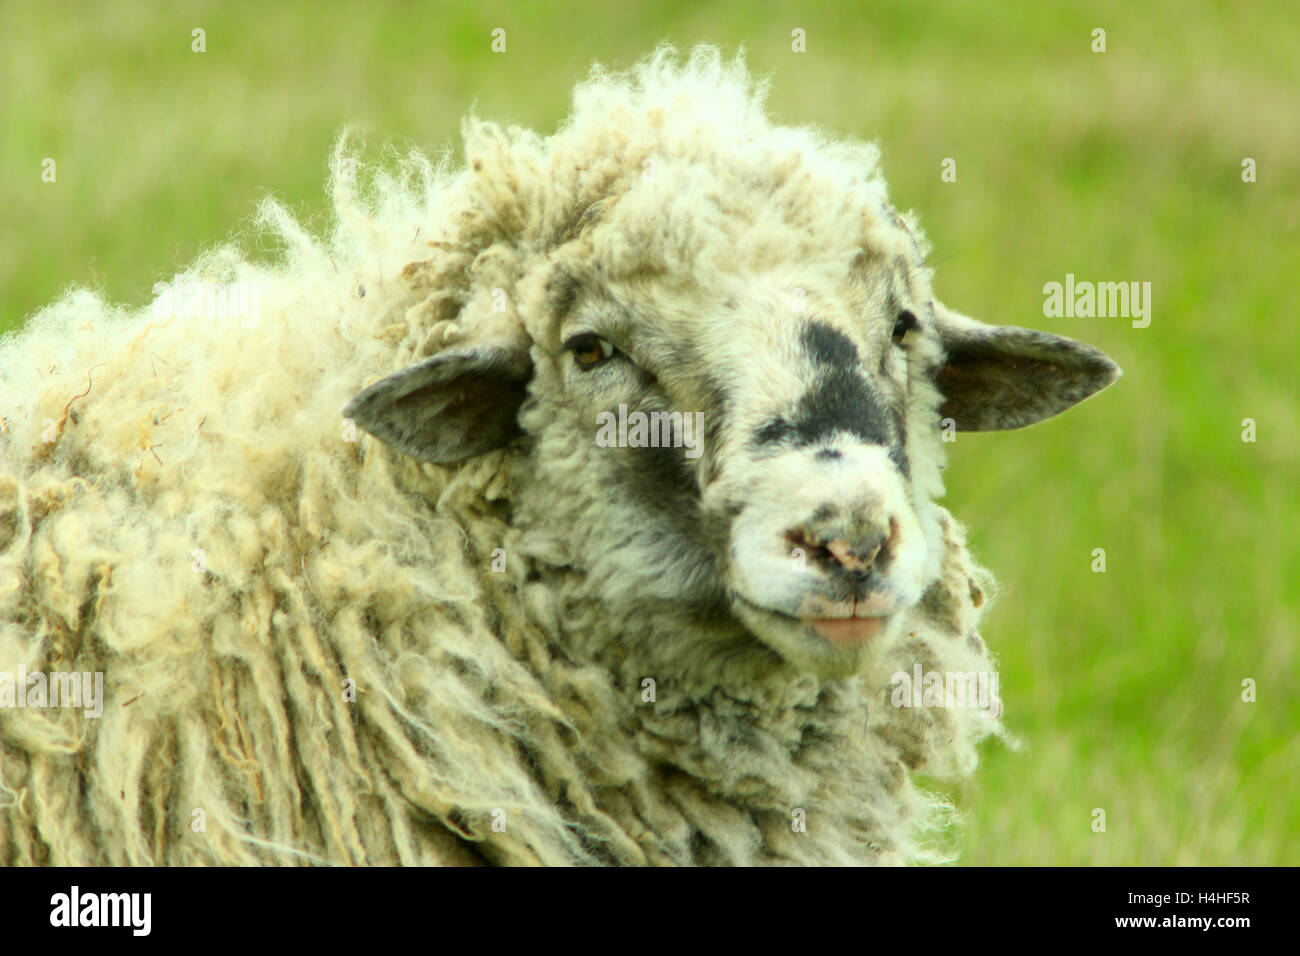 head of big sheep with thick fleece Stock Photo